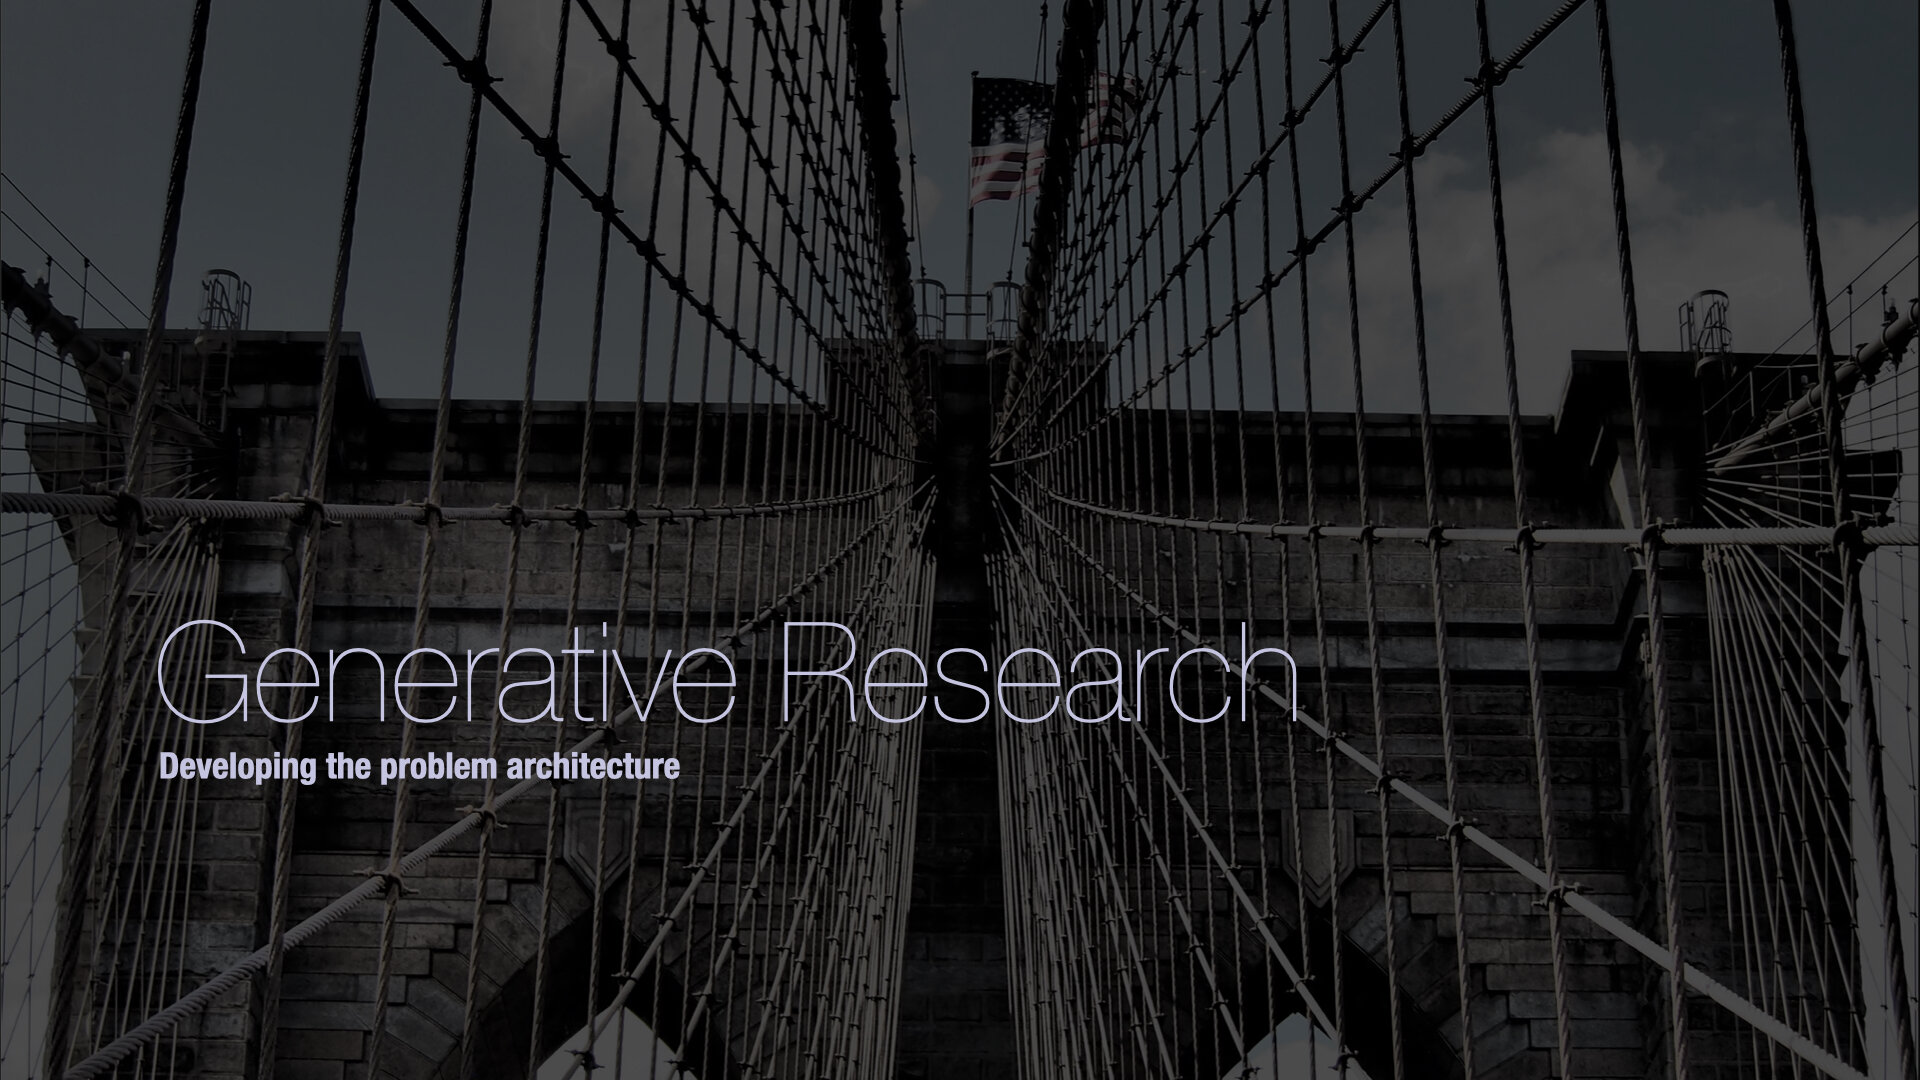 Slideshow showing Regena's generative research